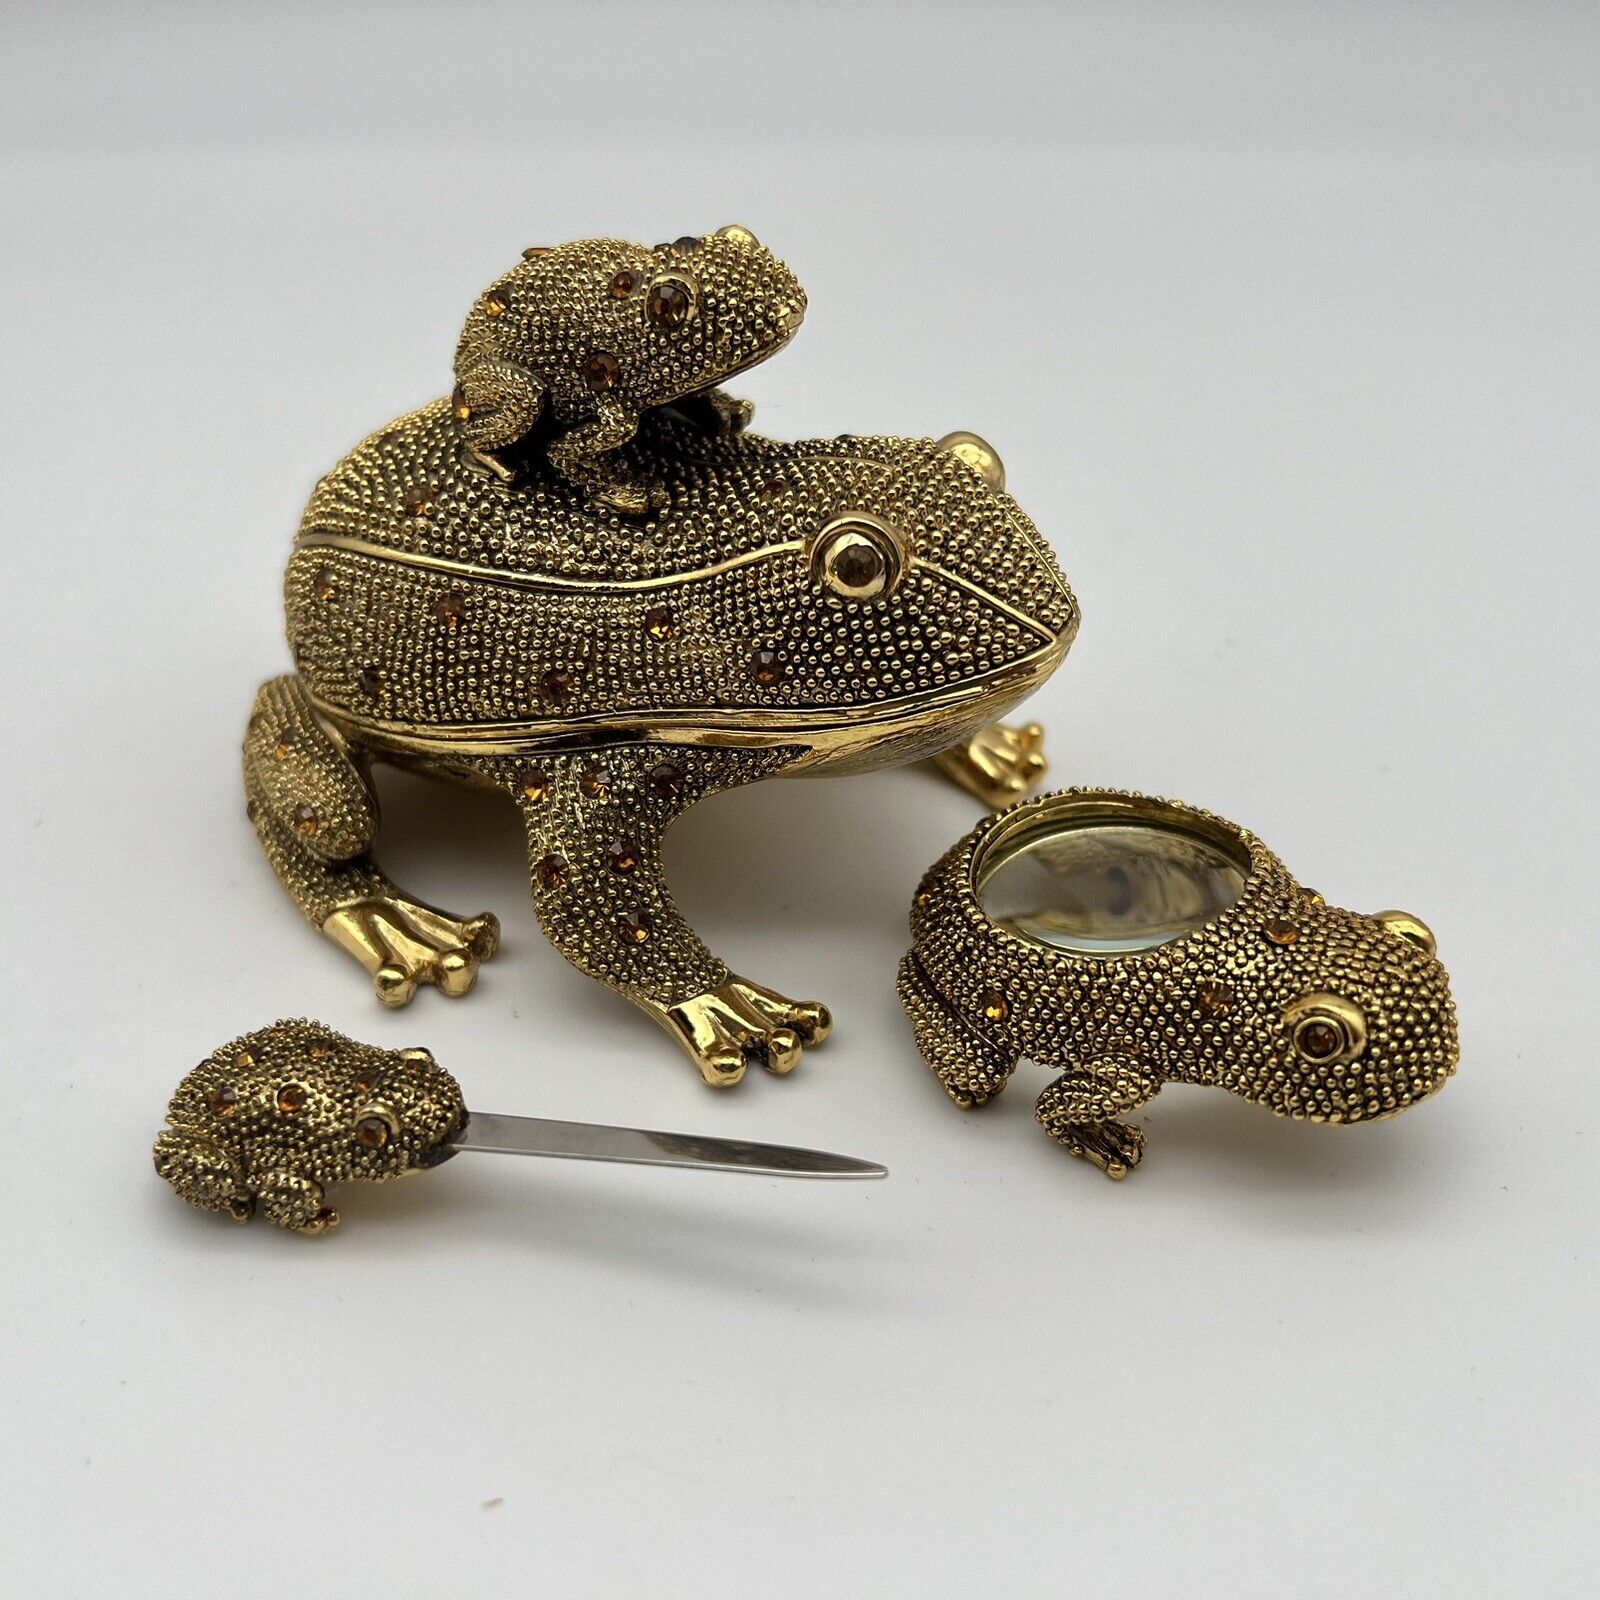 Bombay Company Brass Frog Jeweled Box Magnifying Glass Letter Opener Desk Set